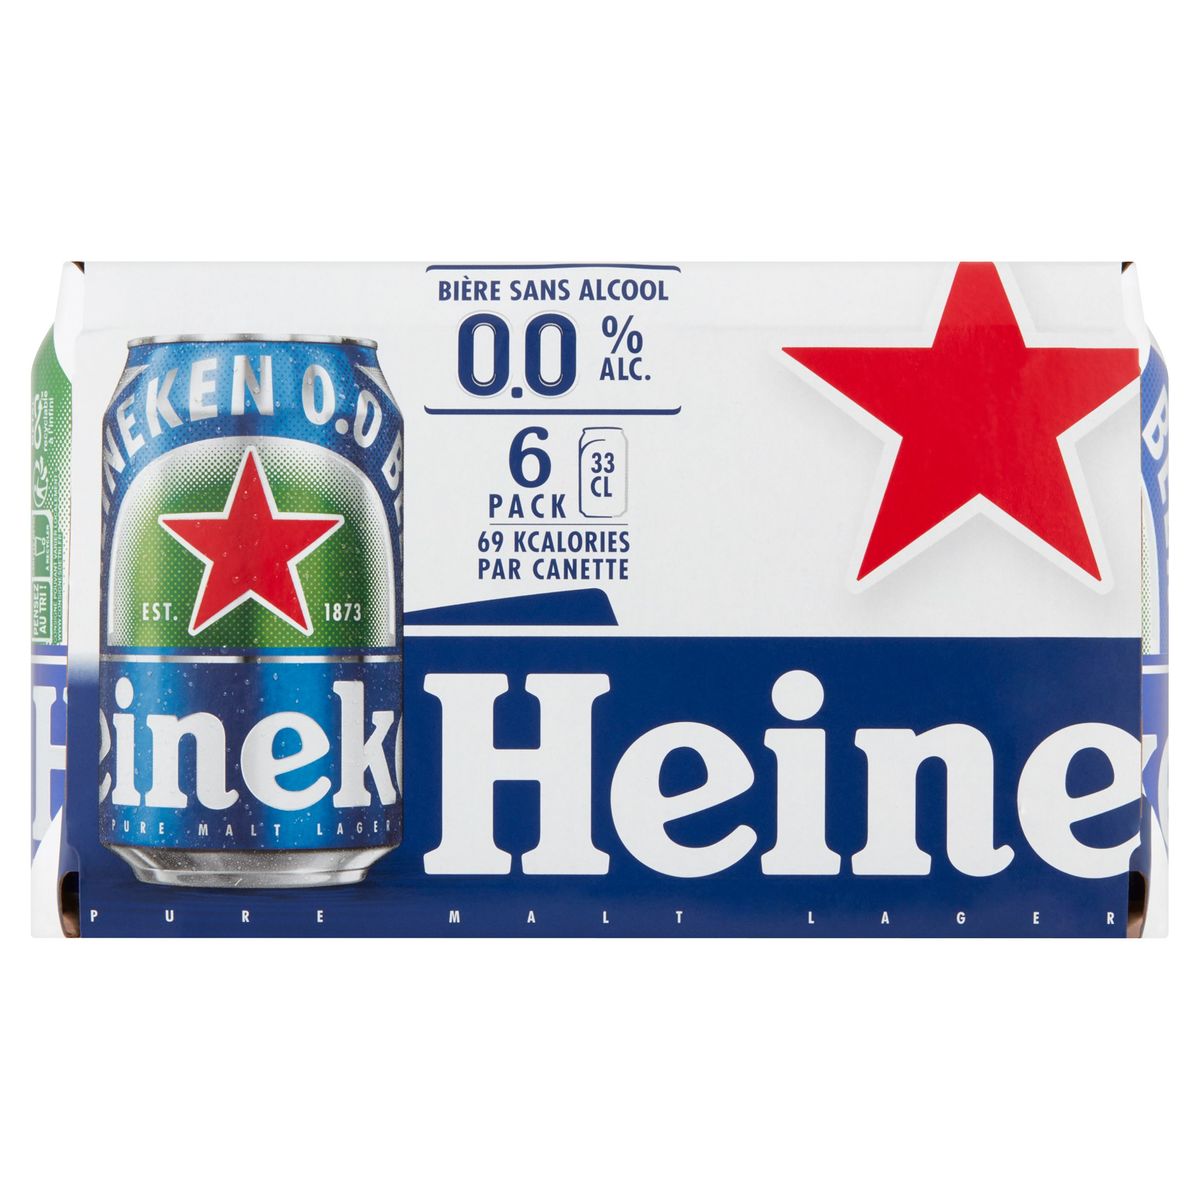 Heineken, Bière sans alcool 0.0, 33cl